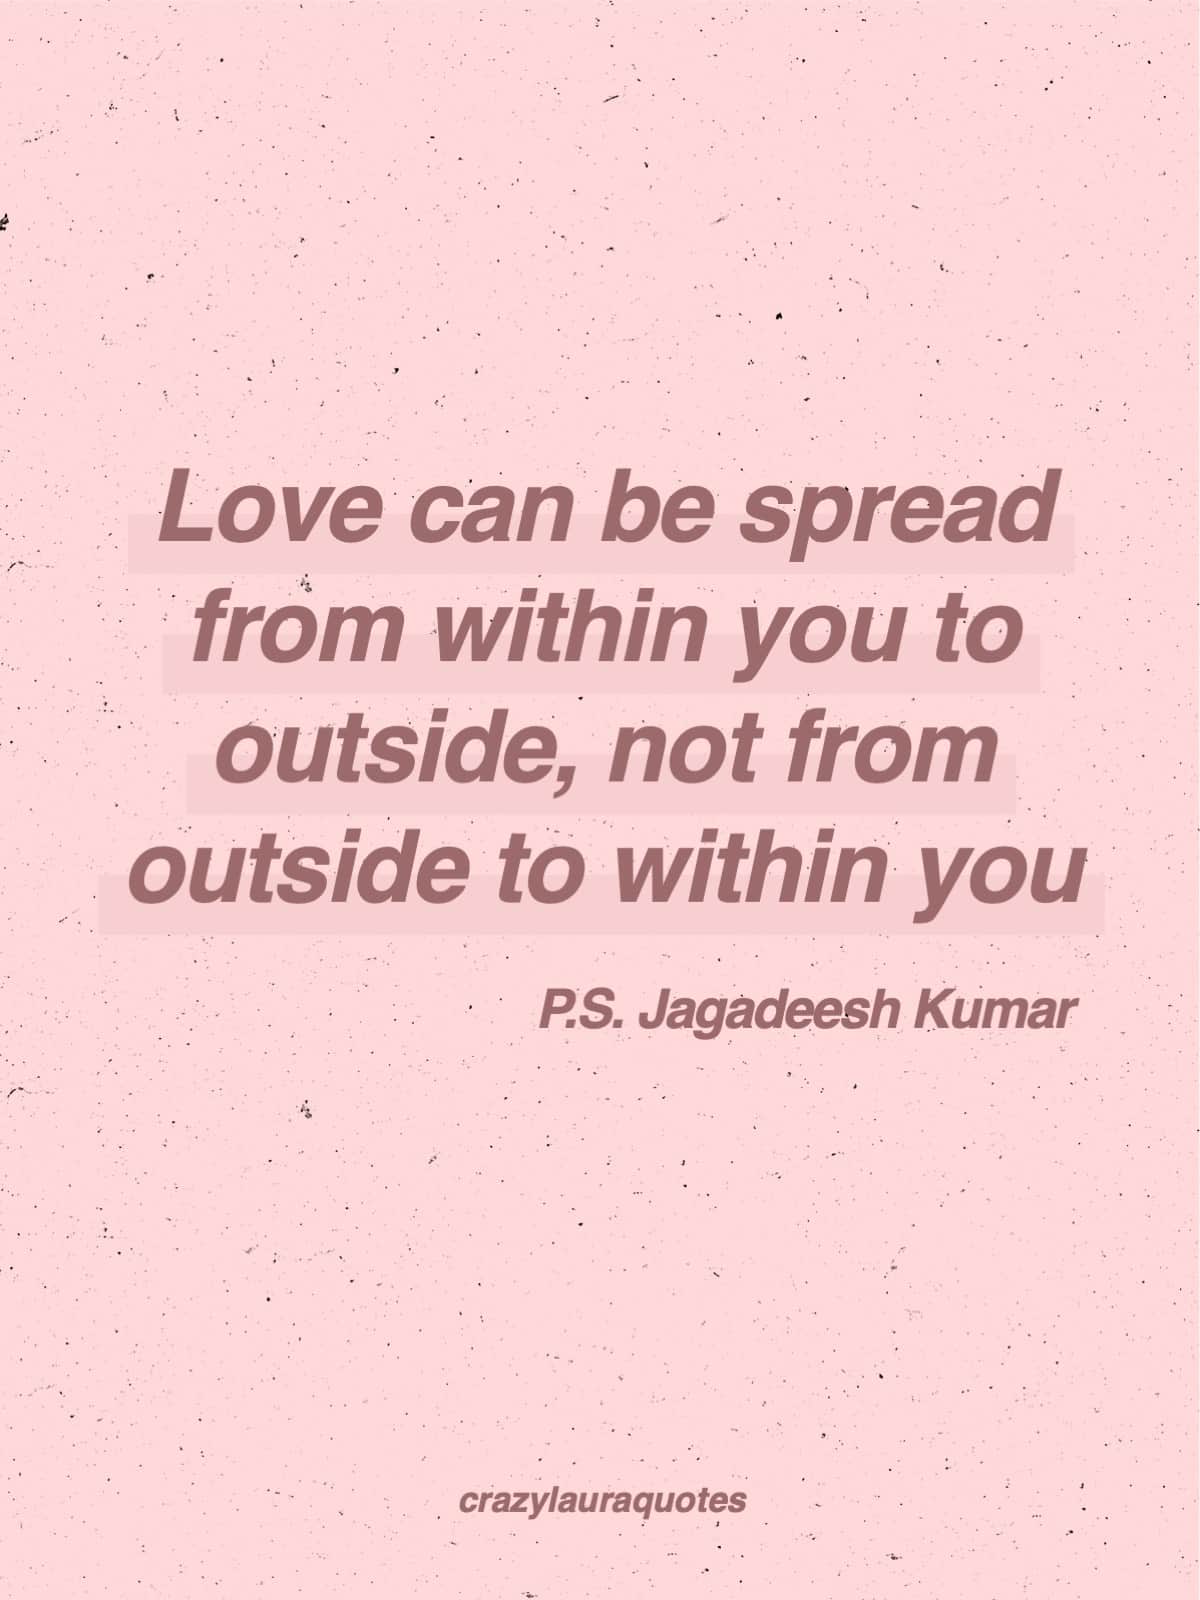 love yourself jagadessh kumar quote